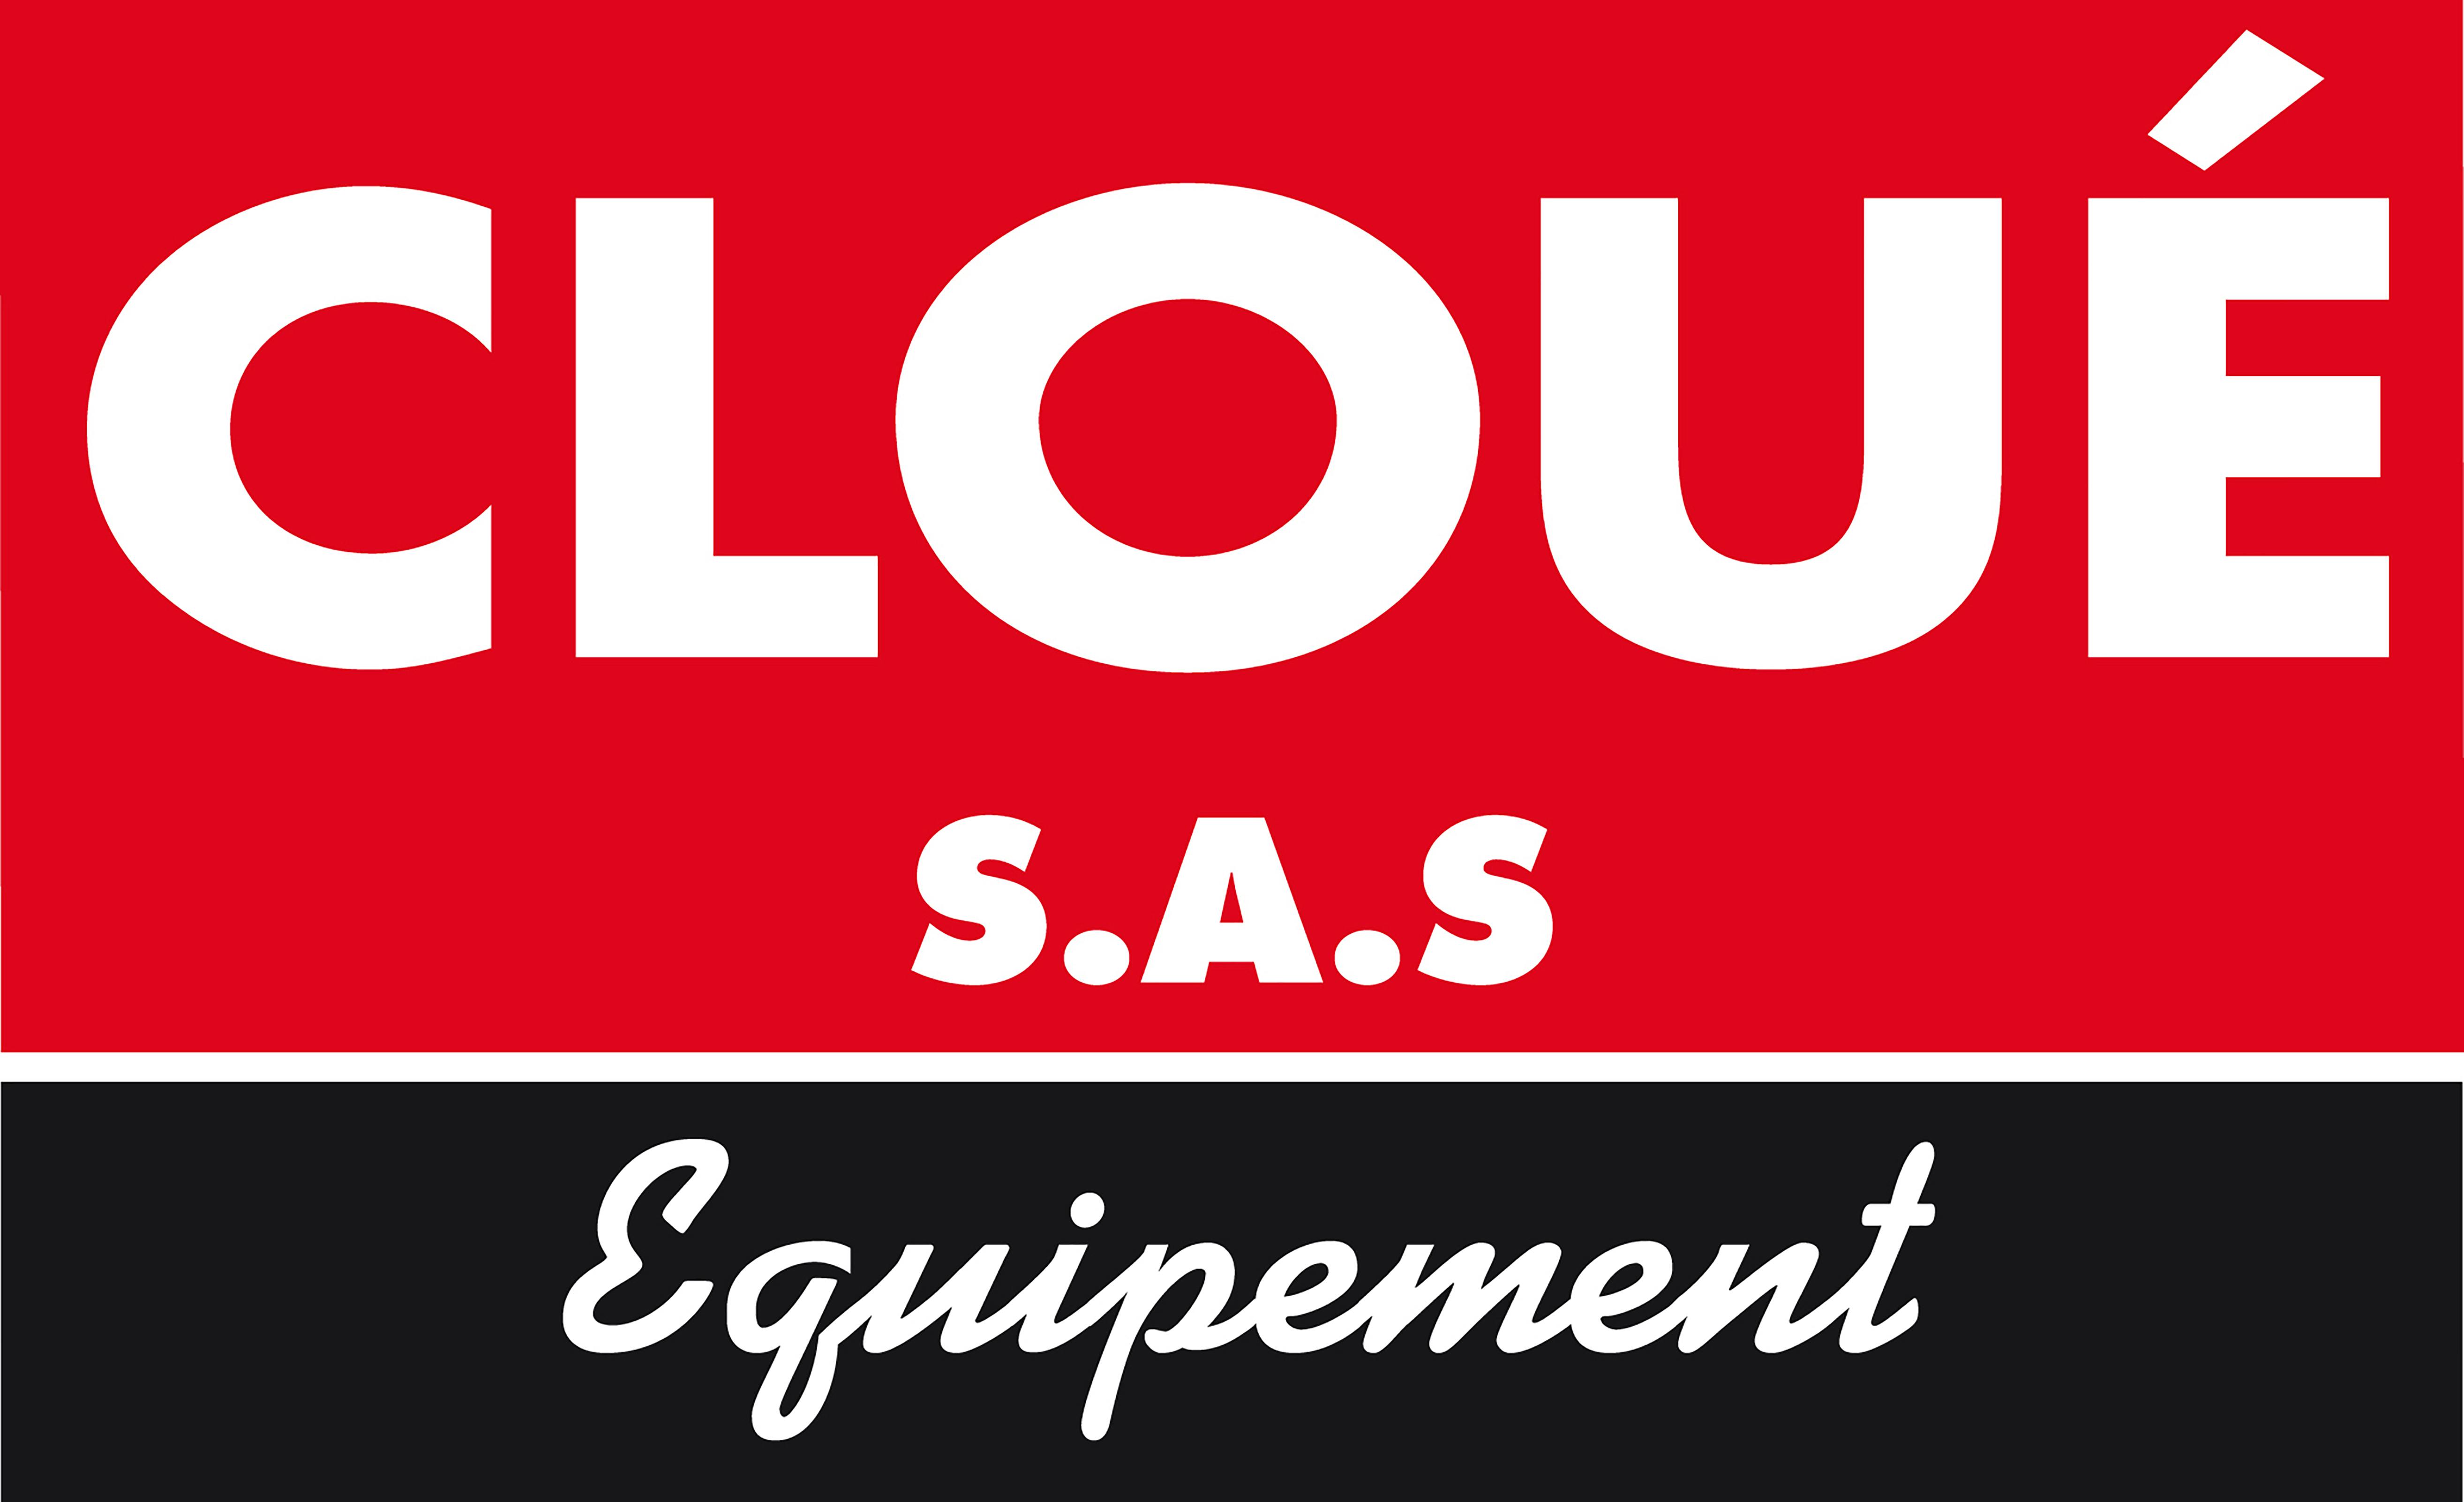 Company logo for 'CLOUE EQUIPEMENT'.